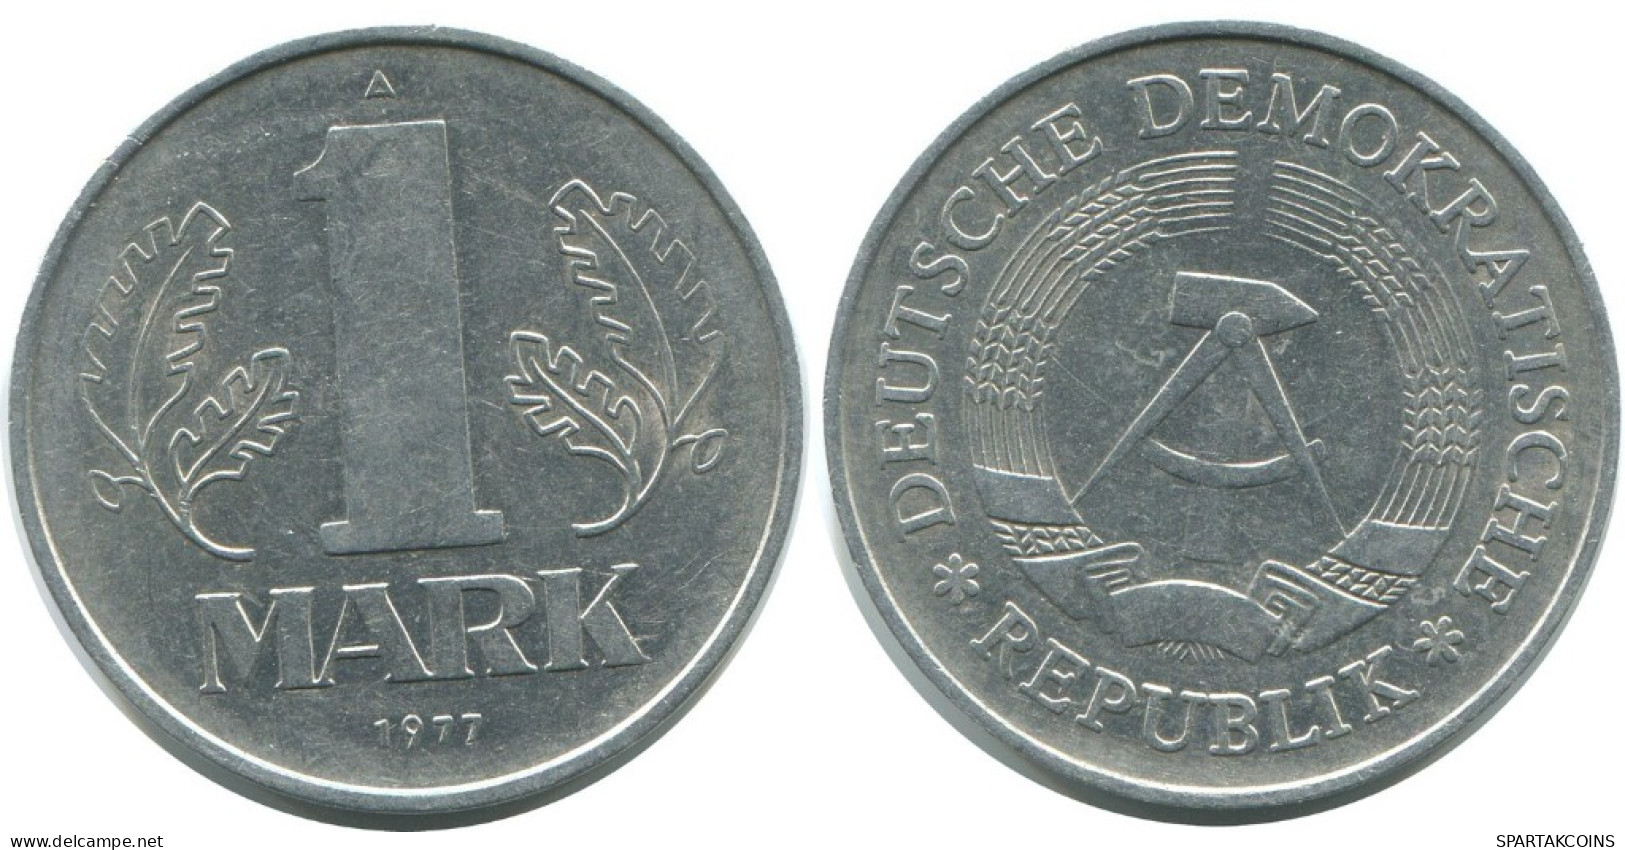 1 MARK 1977 A DDR EAST ALEMANIA Moneda GERMANY #AE138.E.A - 1 Mark